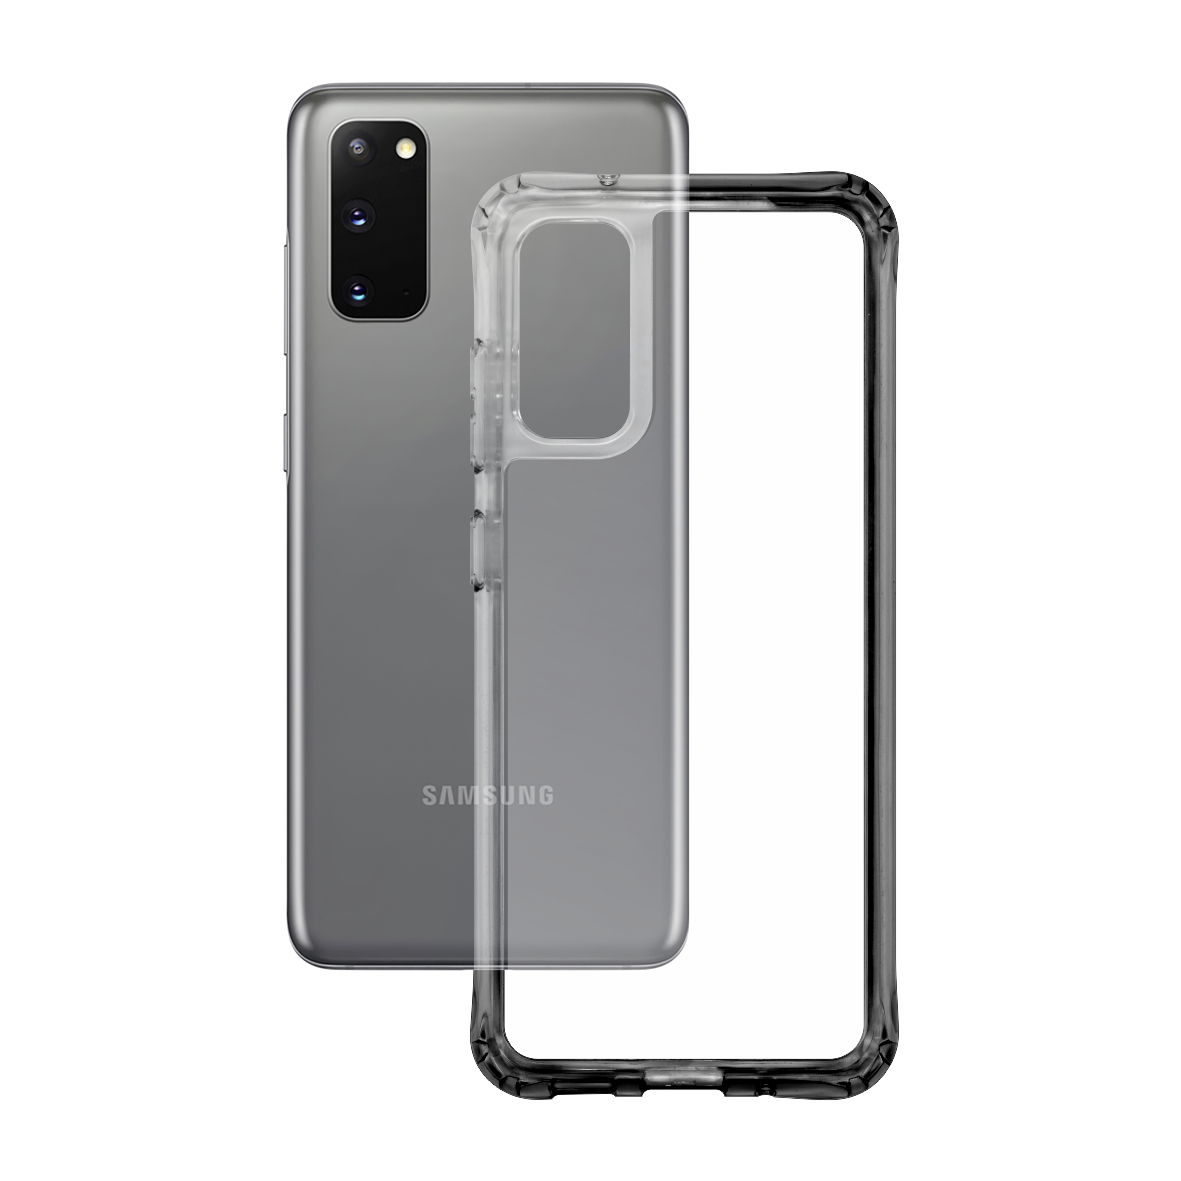 Samsung Galaxy S20 EZY See-Through Hybrid Case, Liquid Case, Clear Case, Crystal Clear Case, Transparent Case by EasySkinz